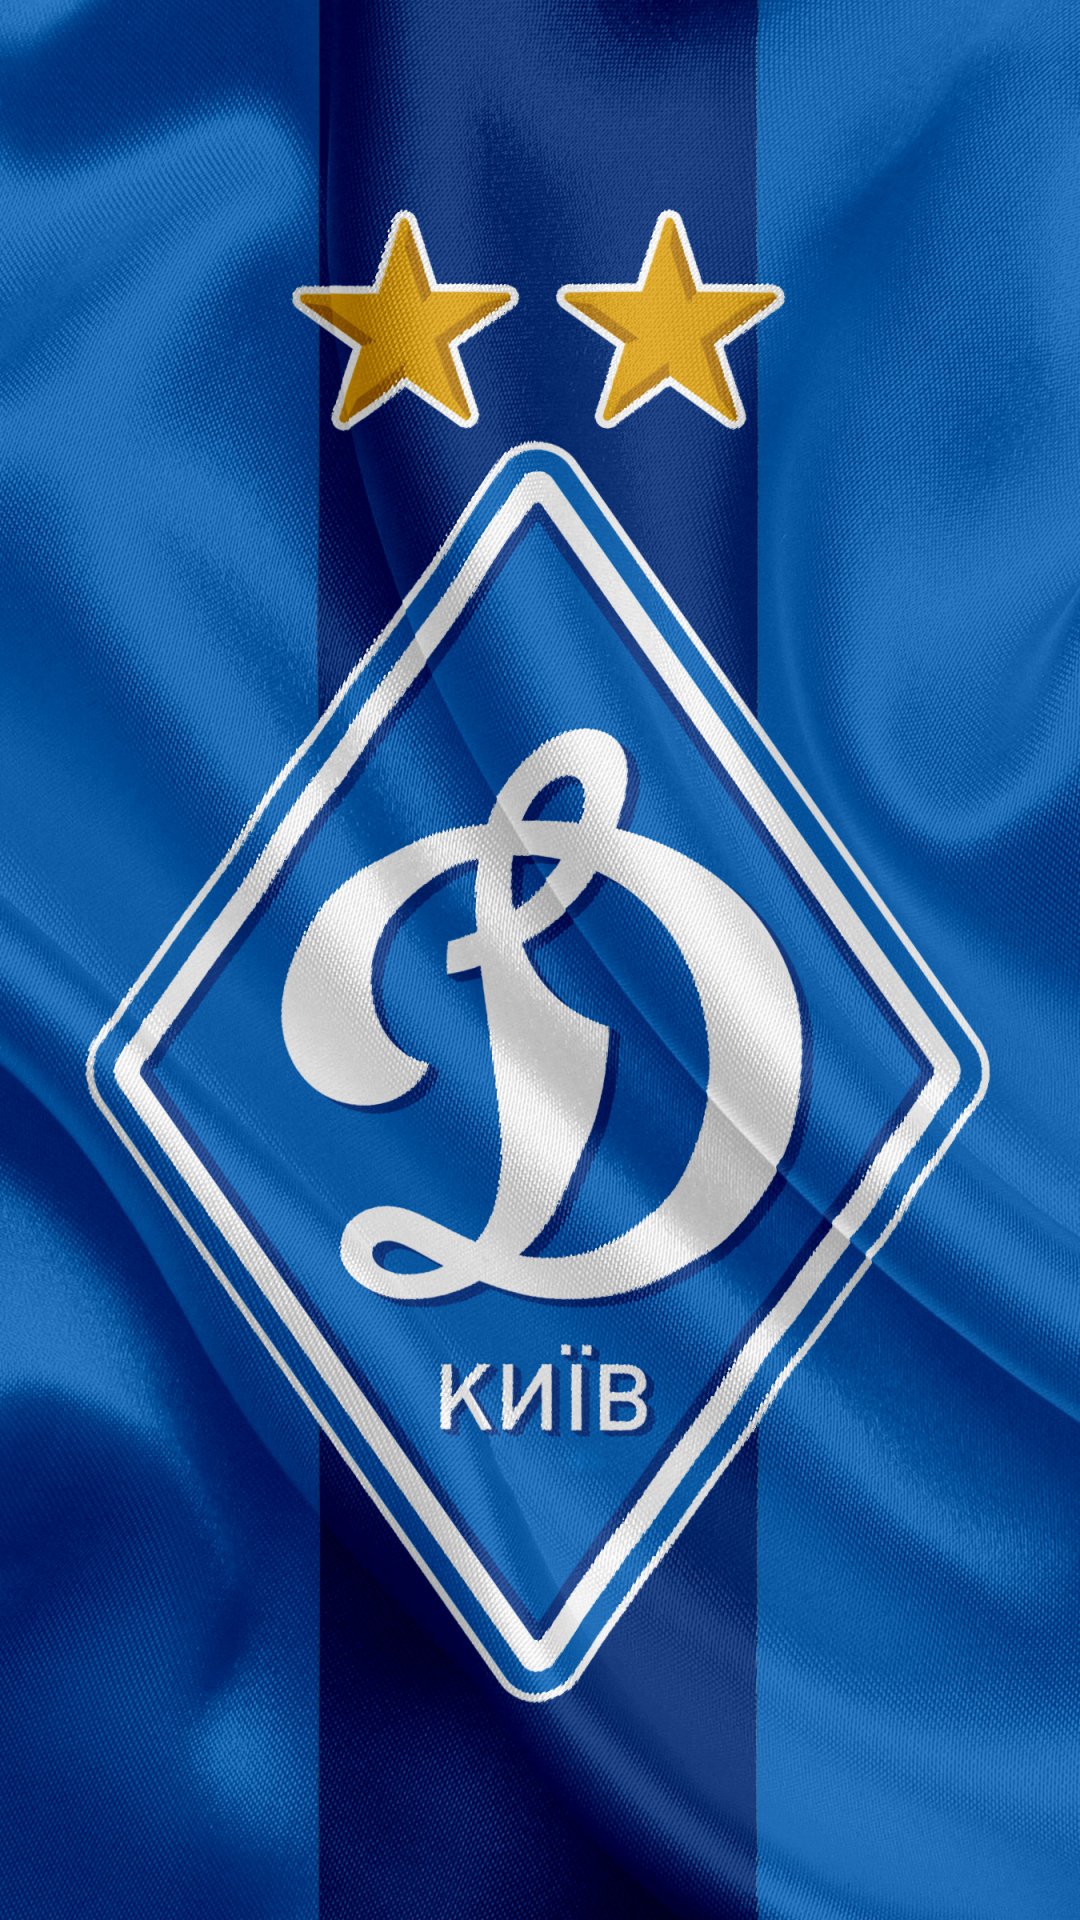 sports, fc dynamo kyiv, emblem, soccer, logo images